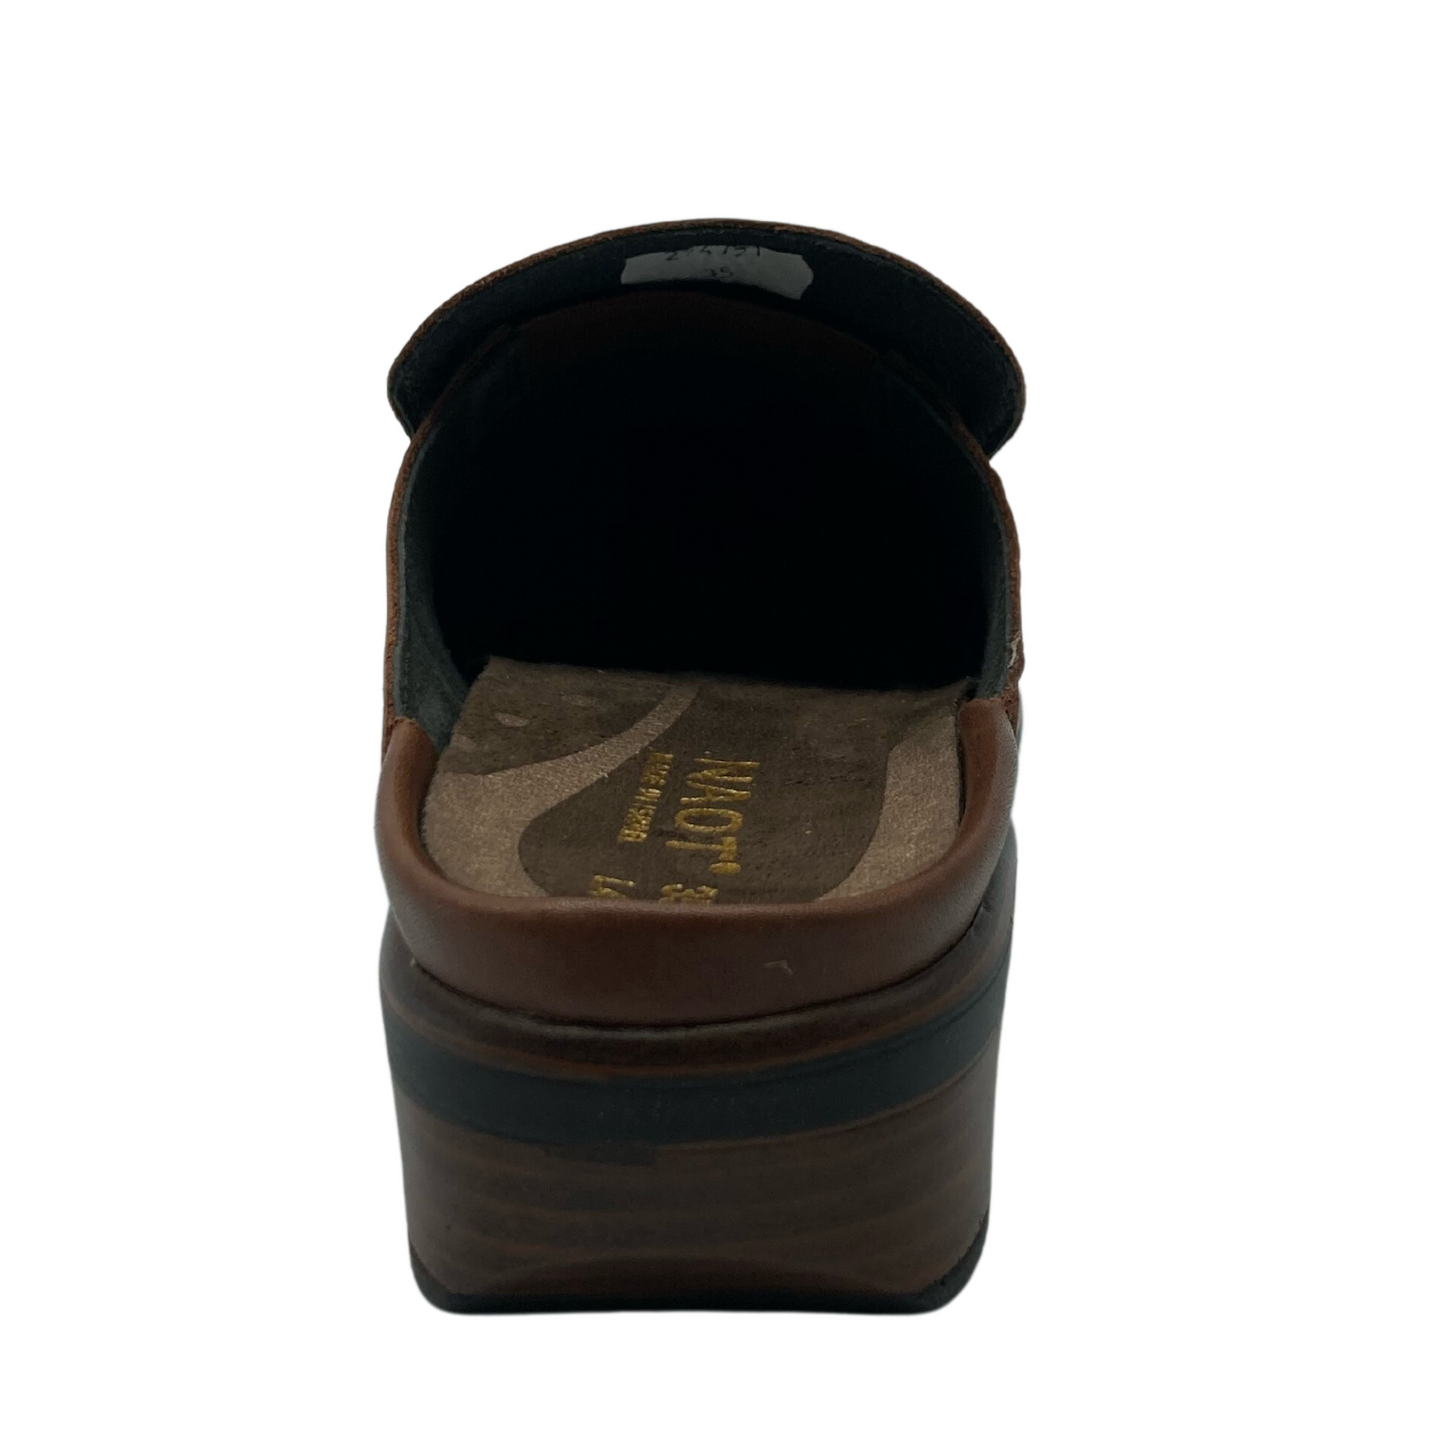 Heel view of brown leather slide loafer with block heel